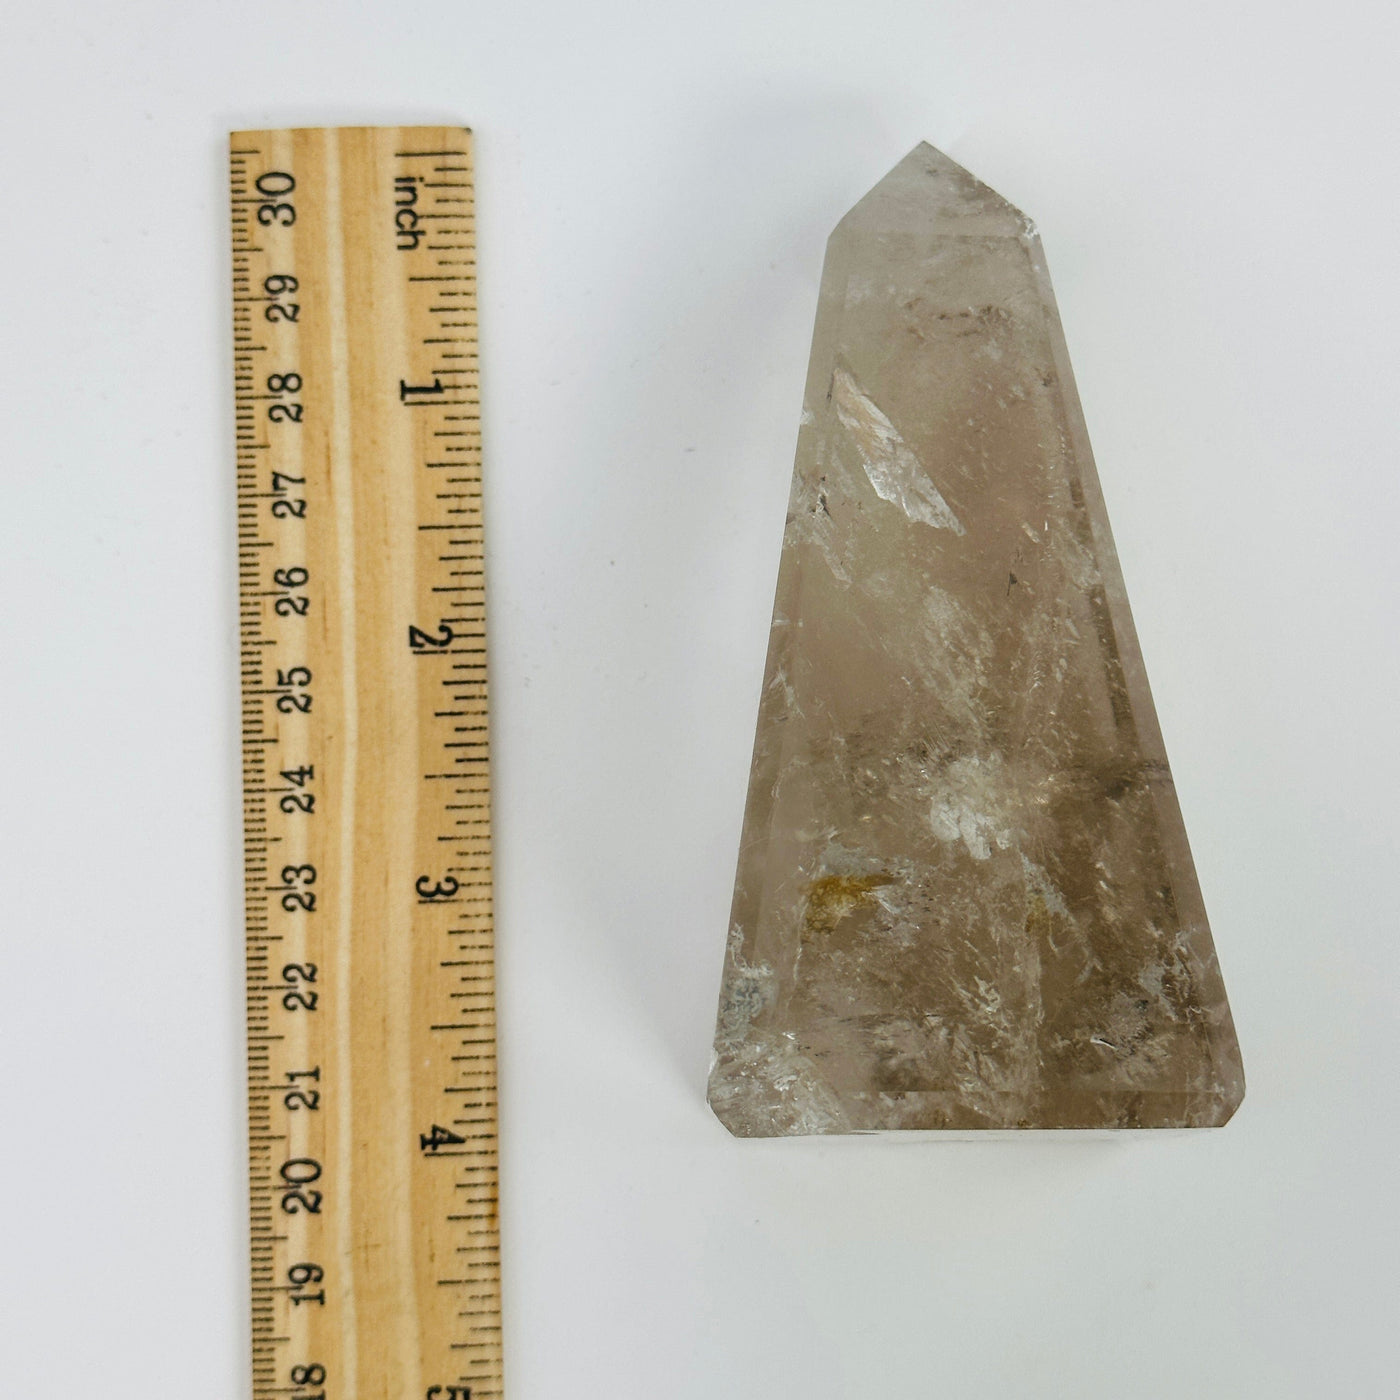 smokey quartz obelisk next to a ruler for size reference